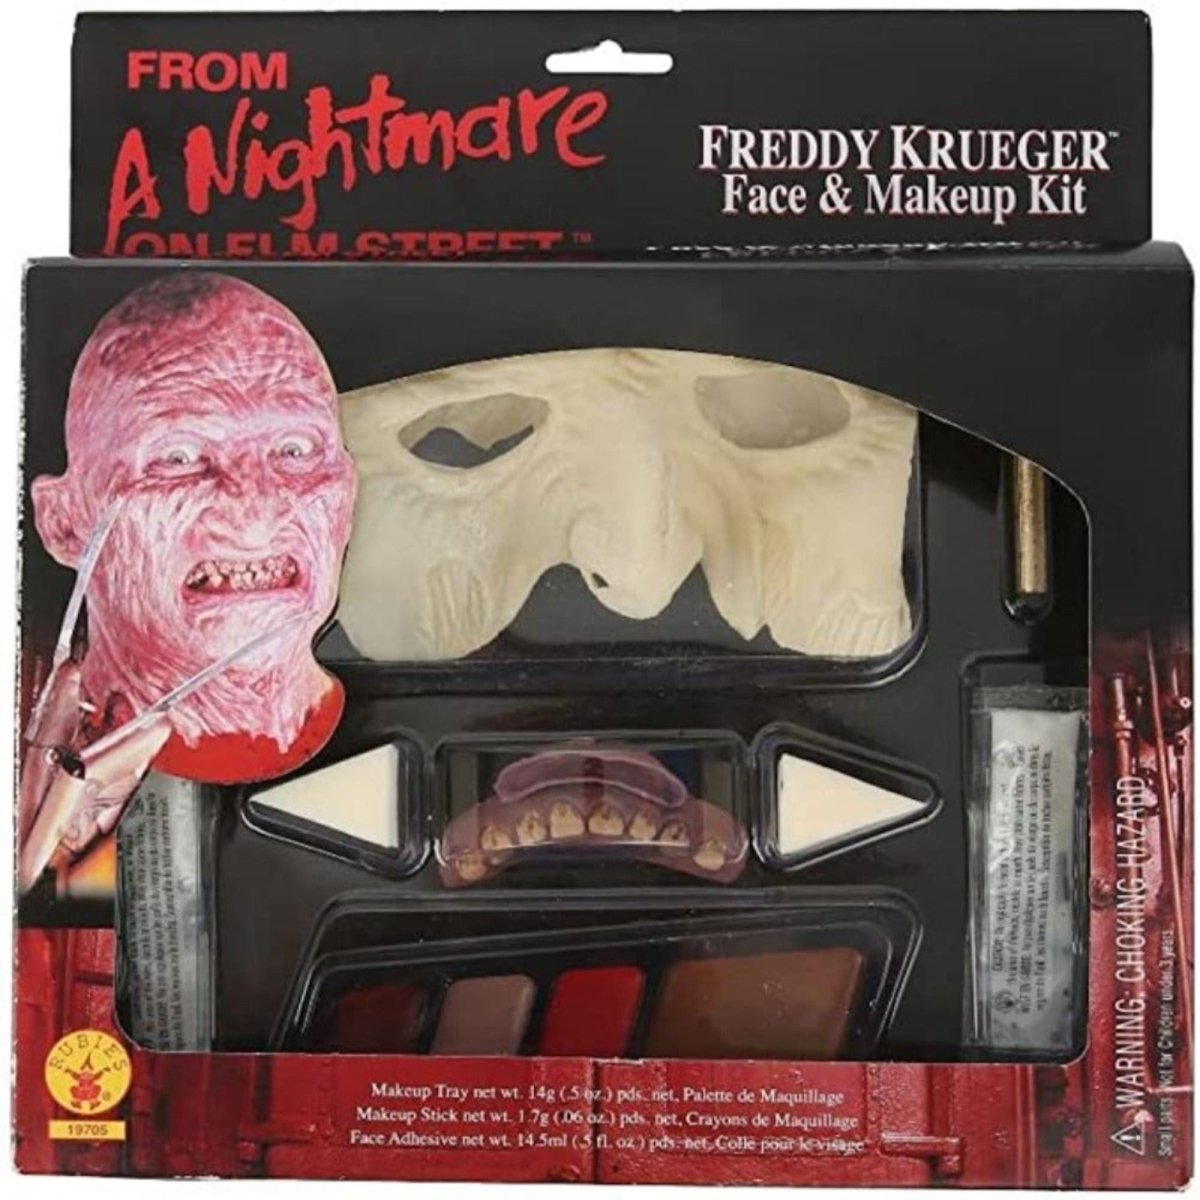 A Nightmare On Elm Street Freddy Krueger Makeup Kit - worldclasscostumes